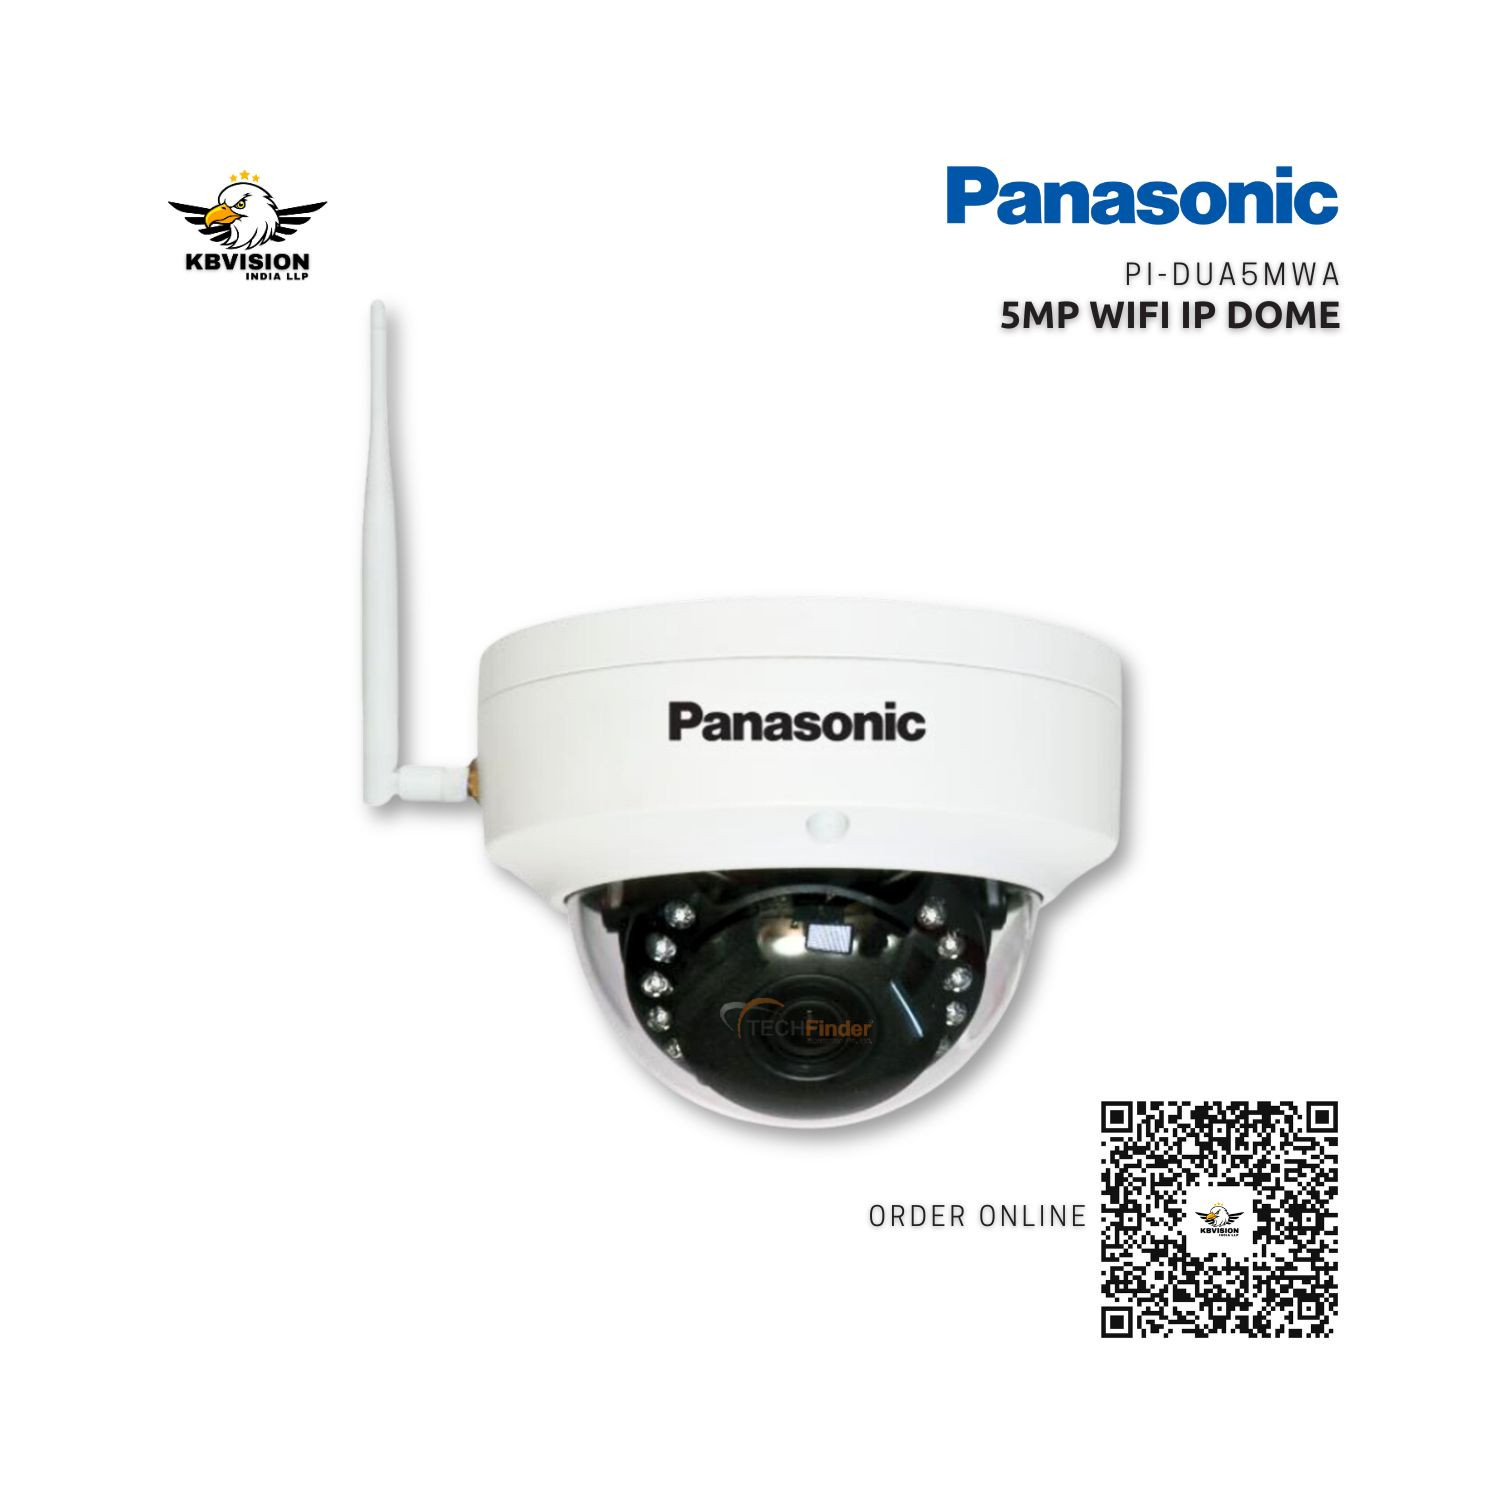 Panasonic PI-DUA5MWA 5mp Wi-Fi Ip Dome Camera